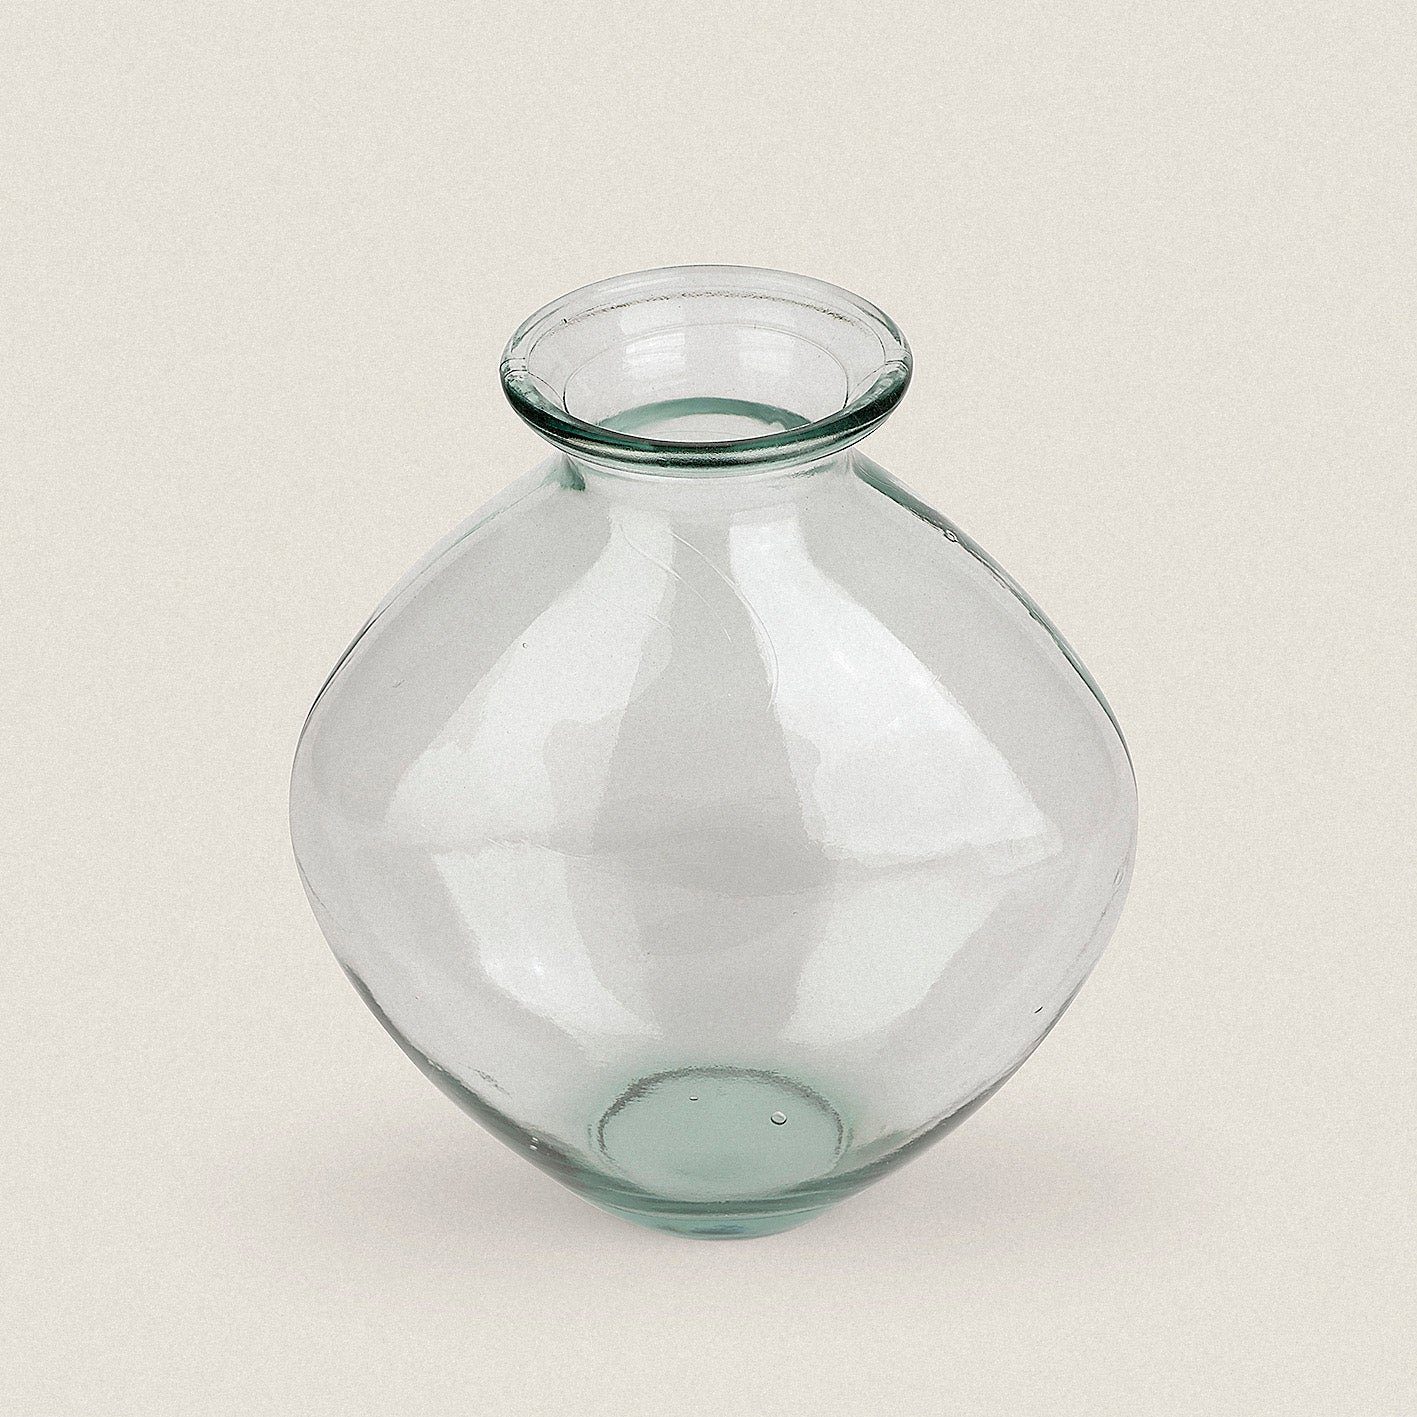 "Maria", Altglas the % up Tischvase Vase way 100